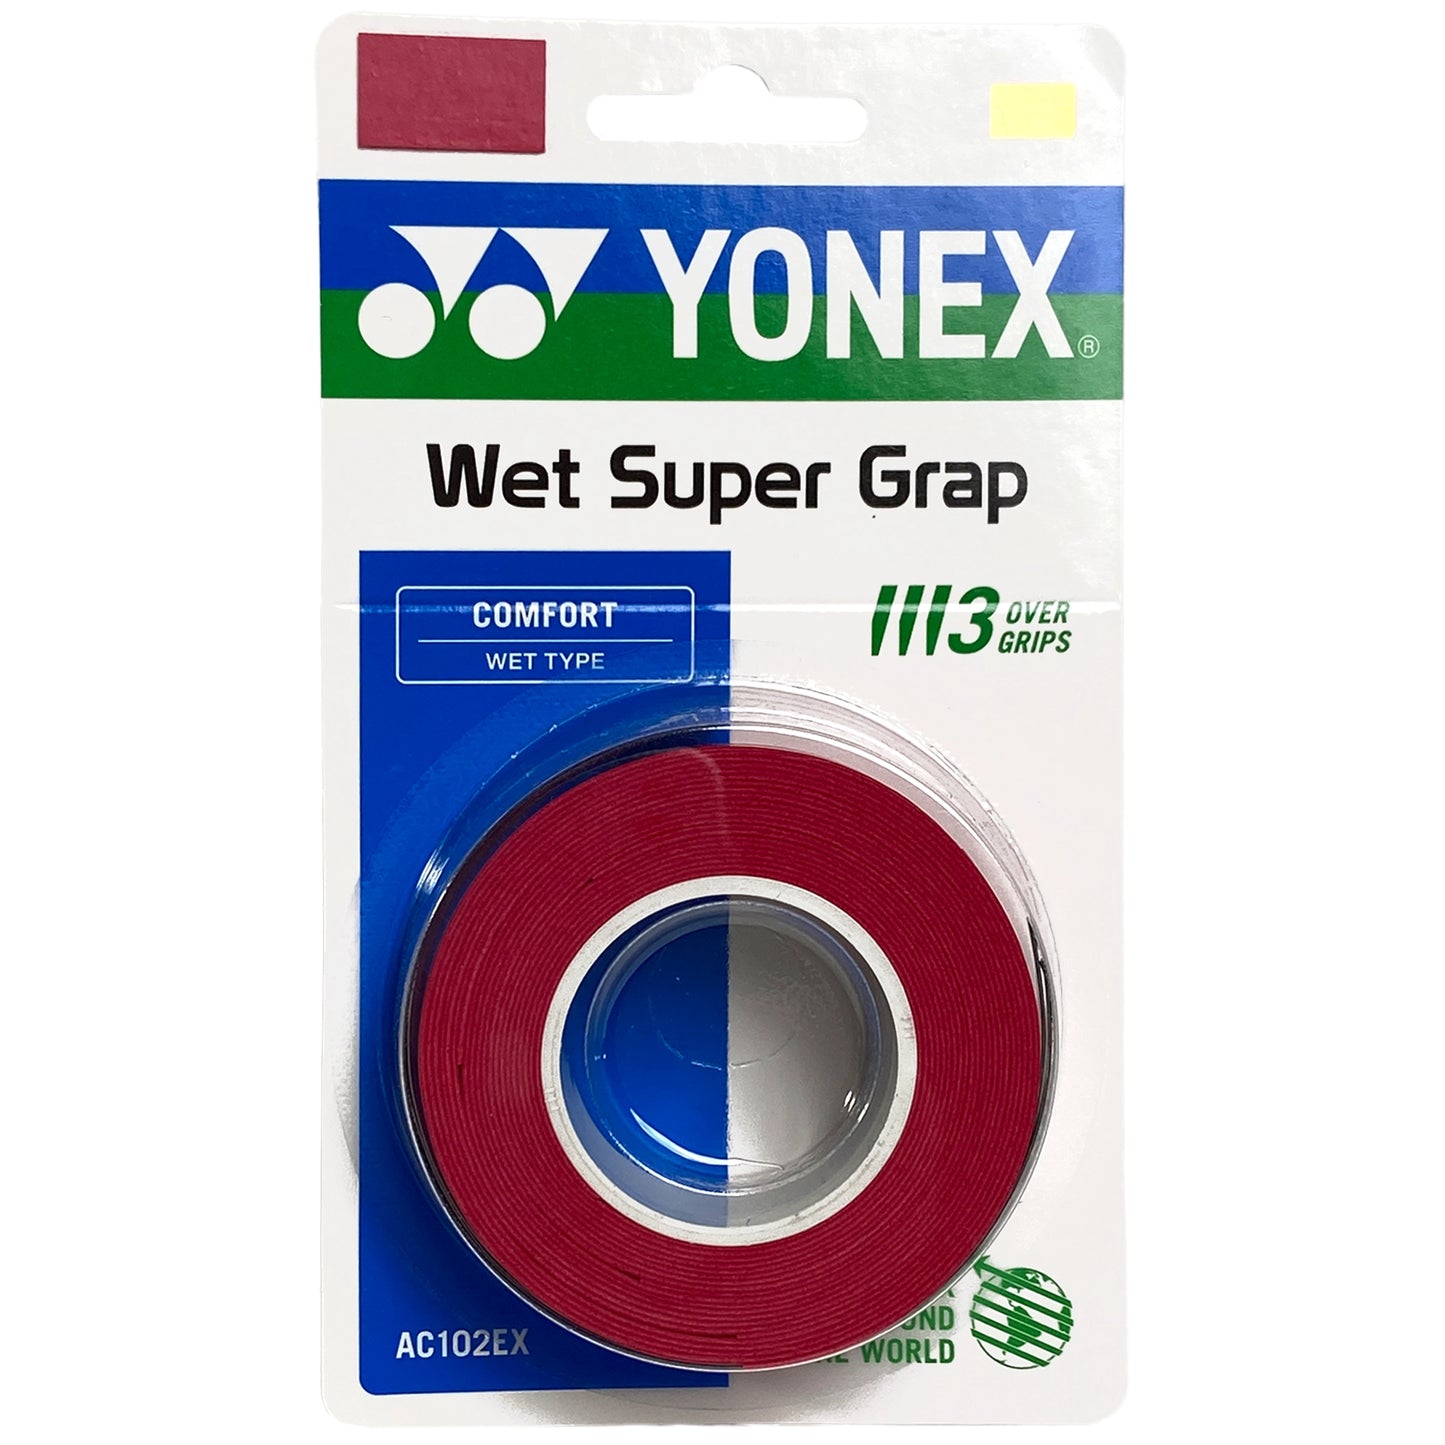 Yonex overgrip Wet Super Grap (3) Wine Red